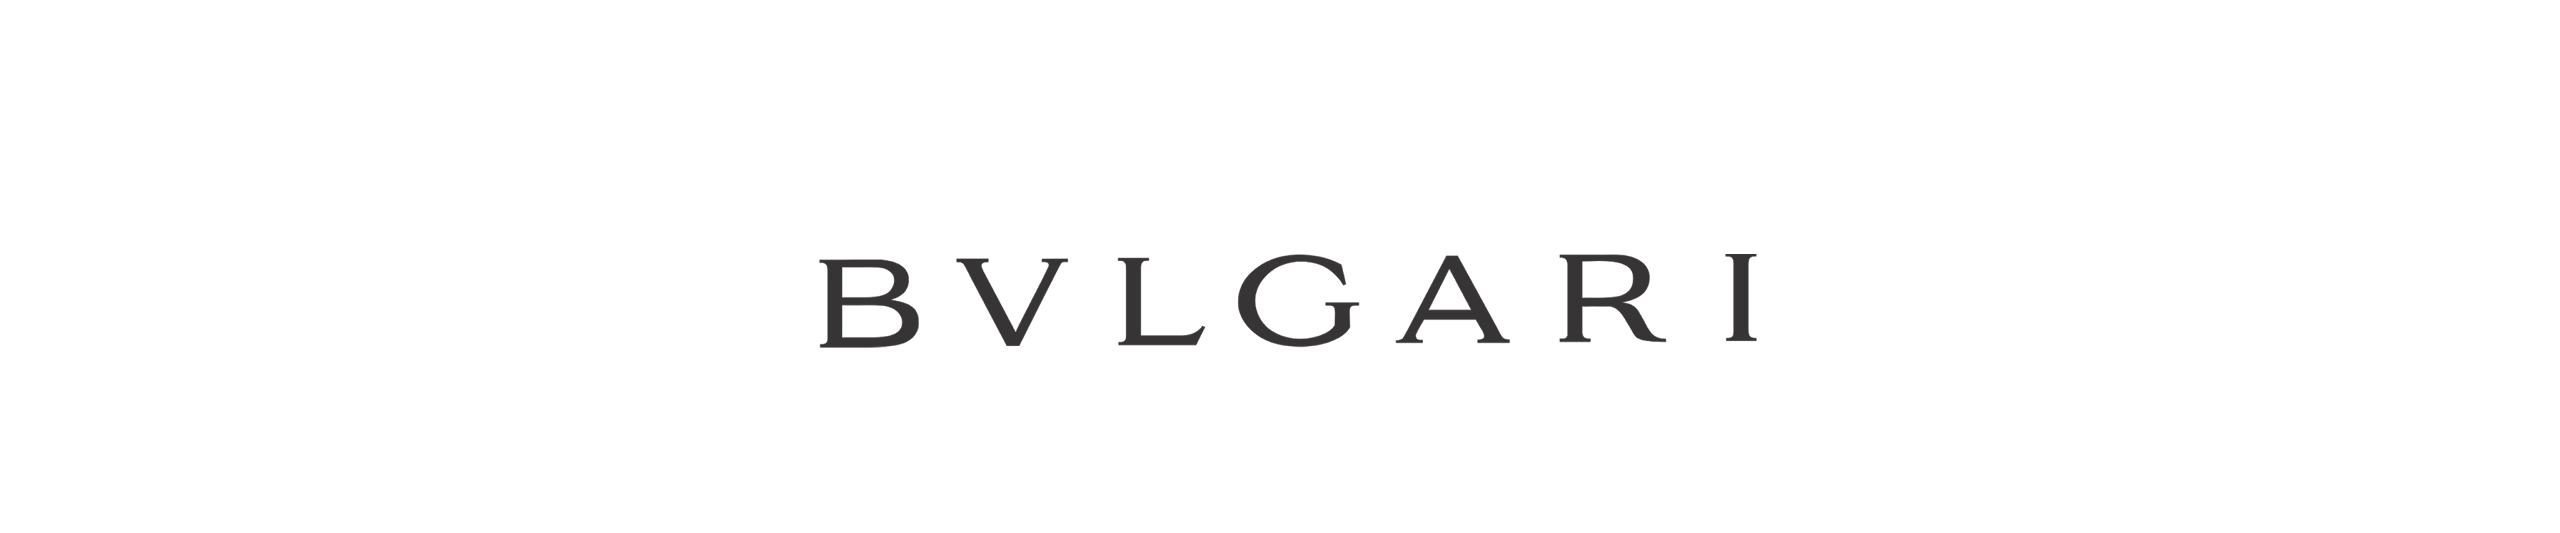 Bvlgari Gold Logo - Bvlgari Glasses Online. Shop Luxury Collections